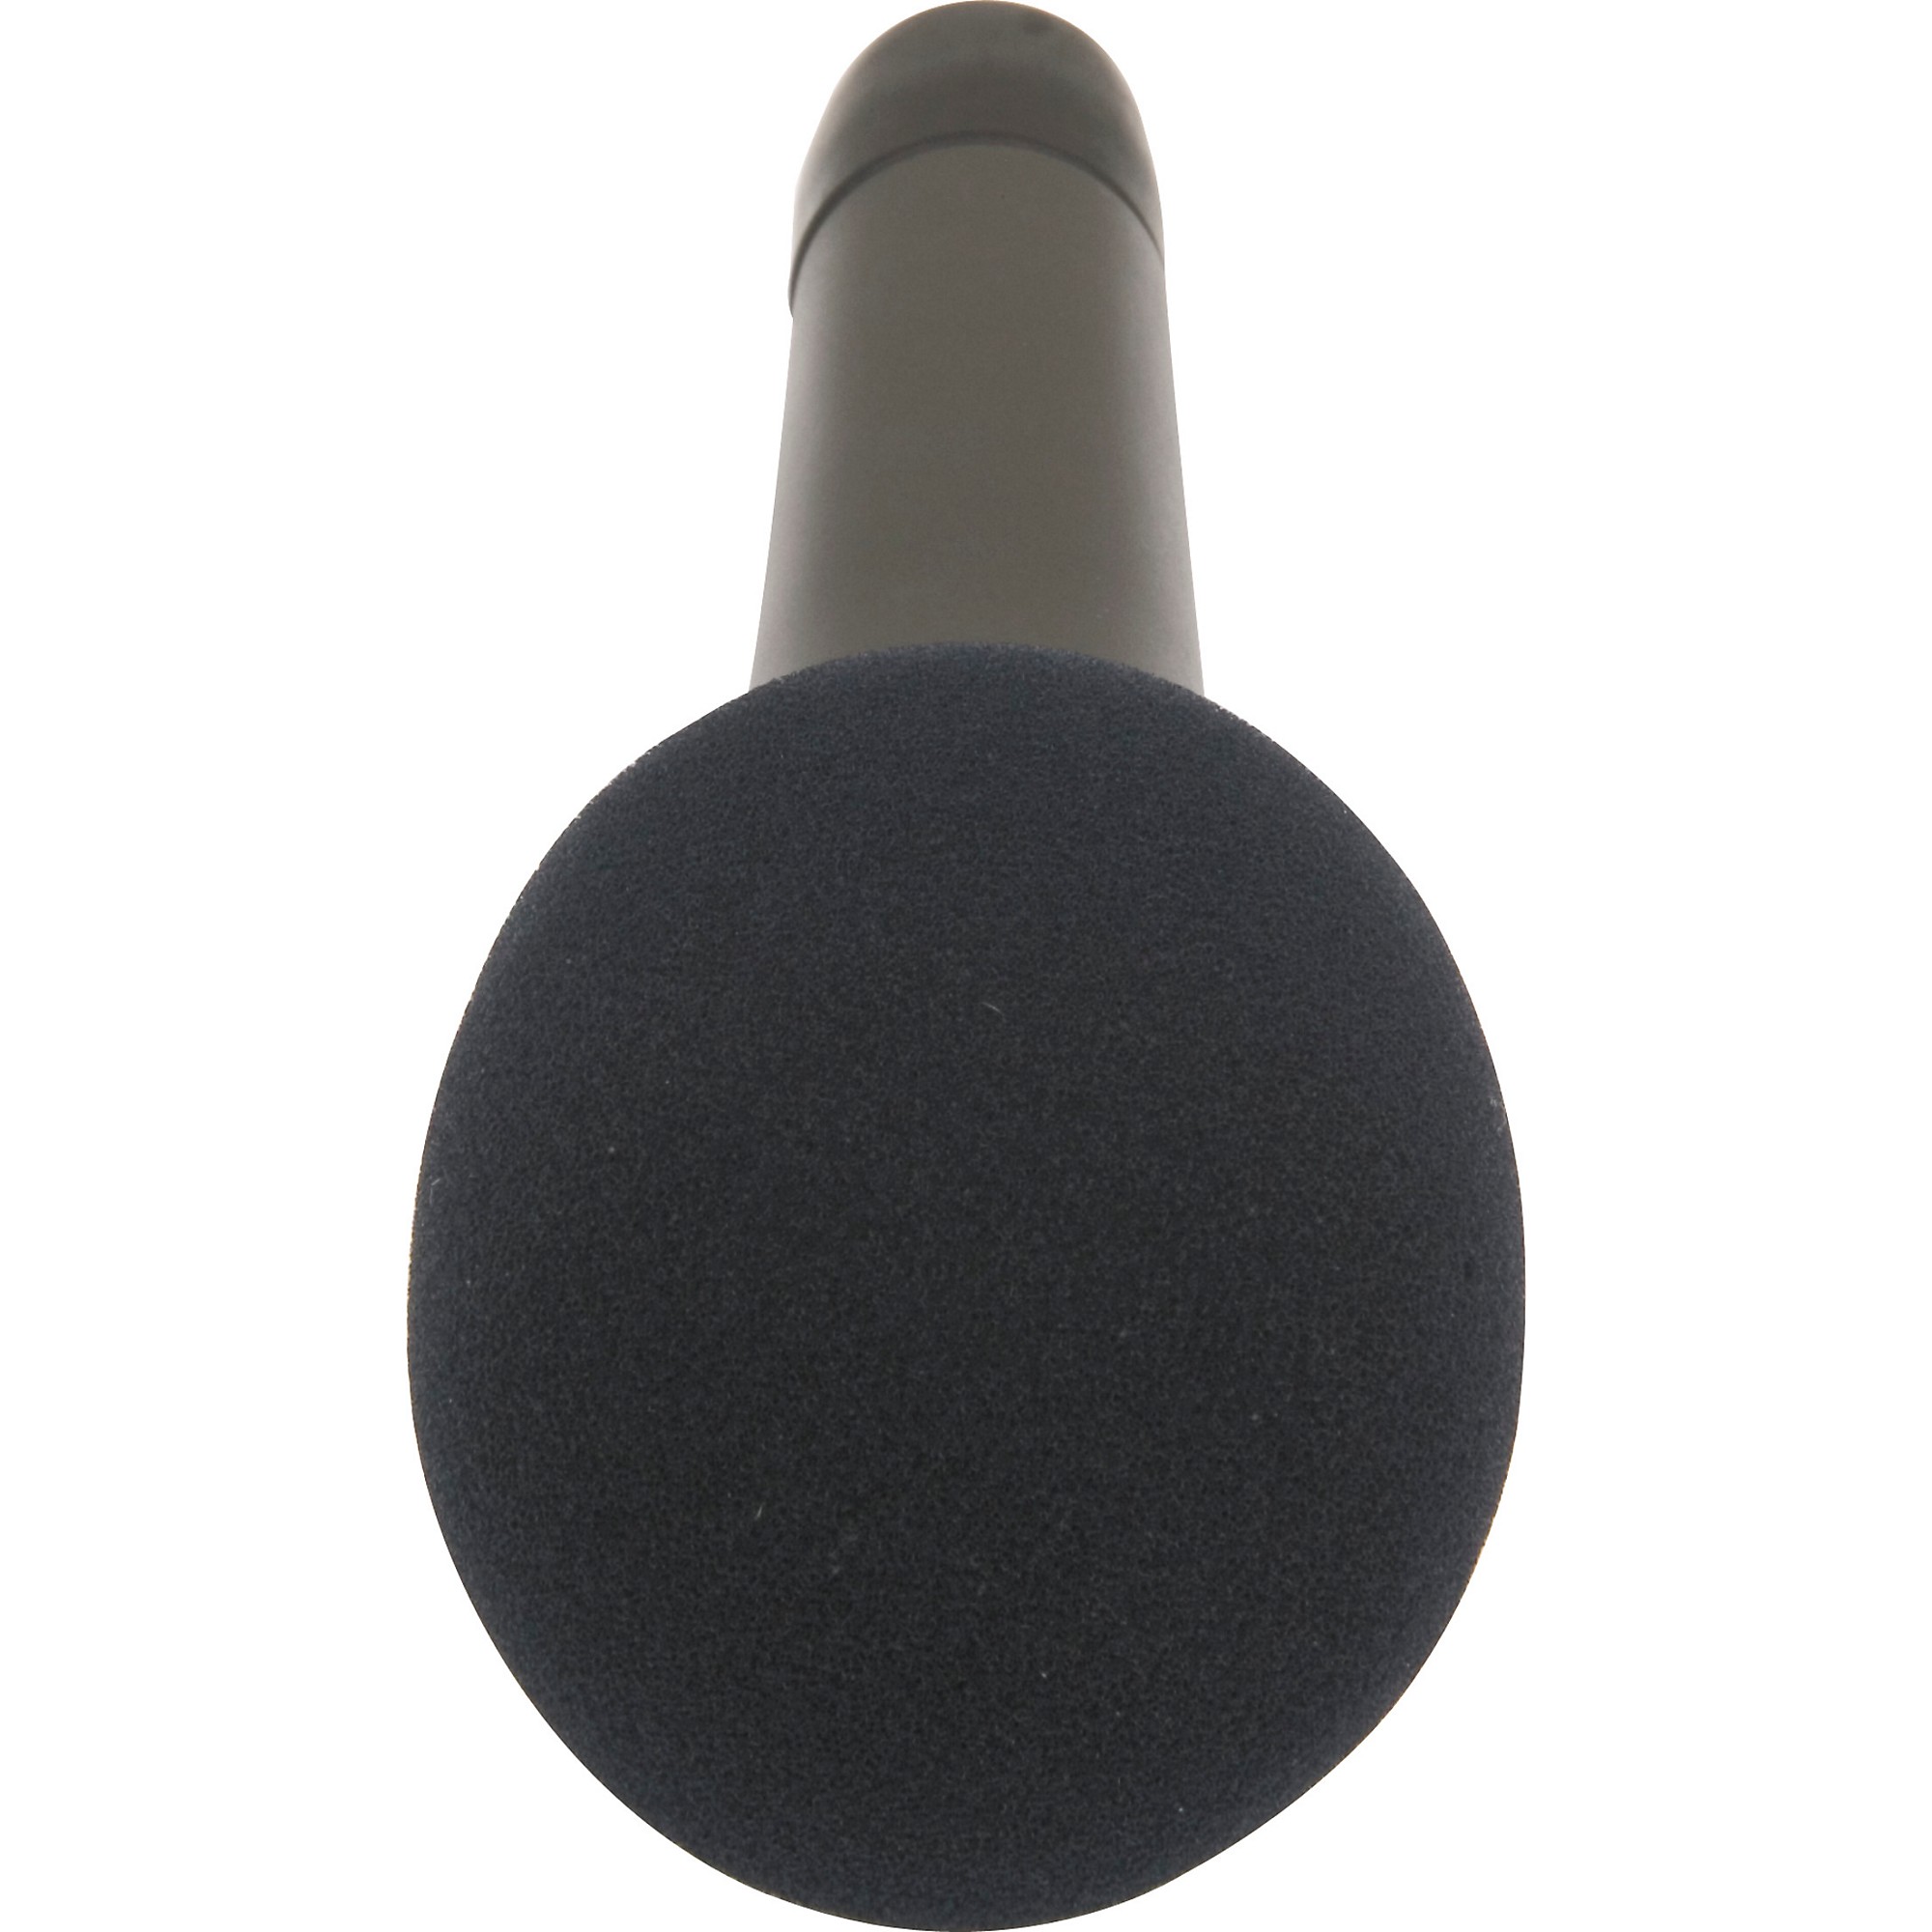 Willstar 20 Pcs Microphone Windscreen Foam Cover Thick Mic Covers